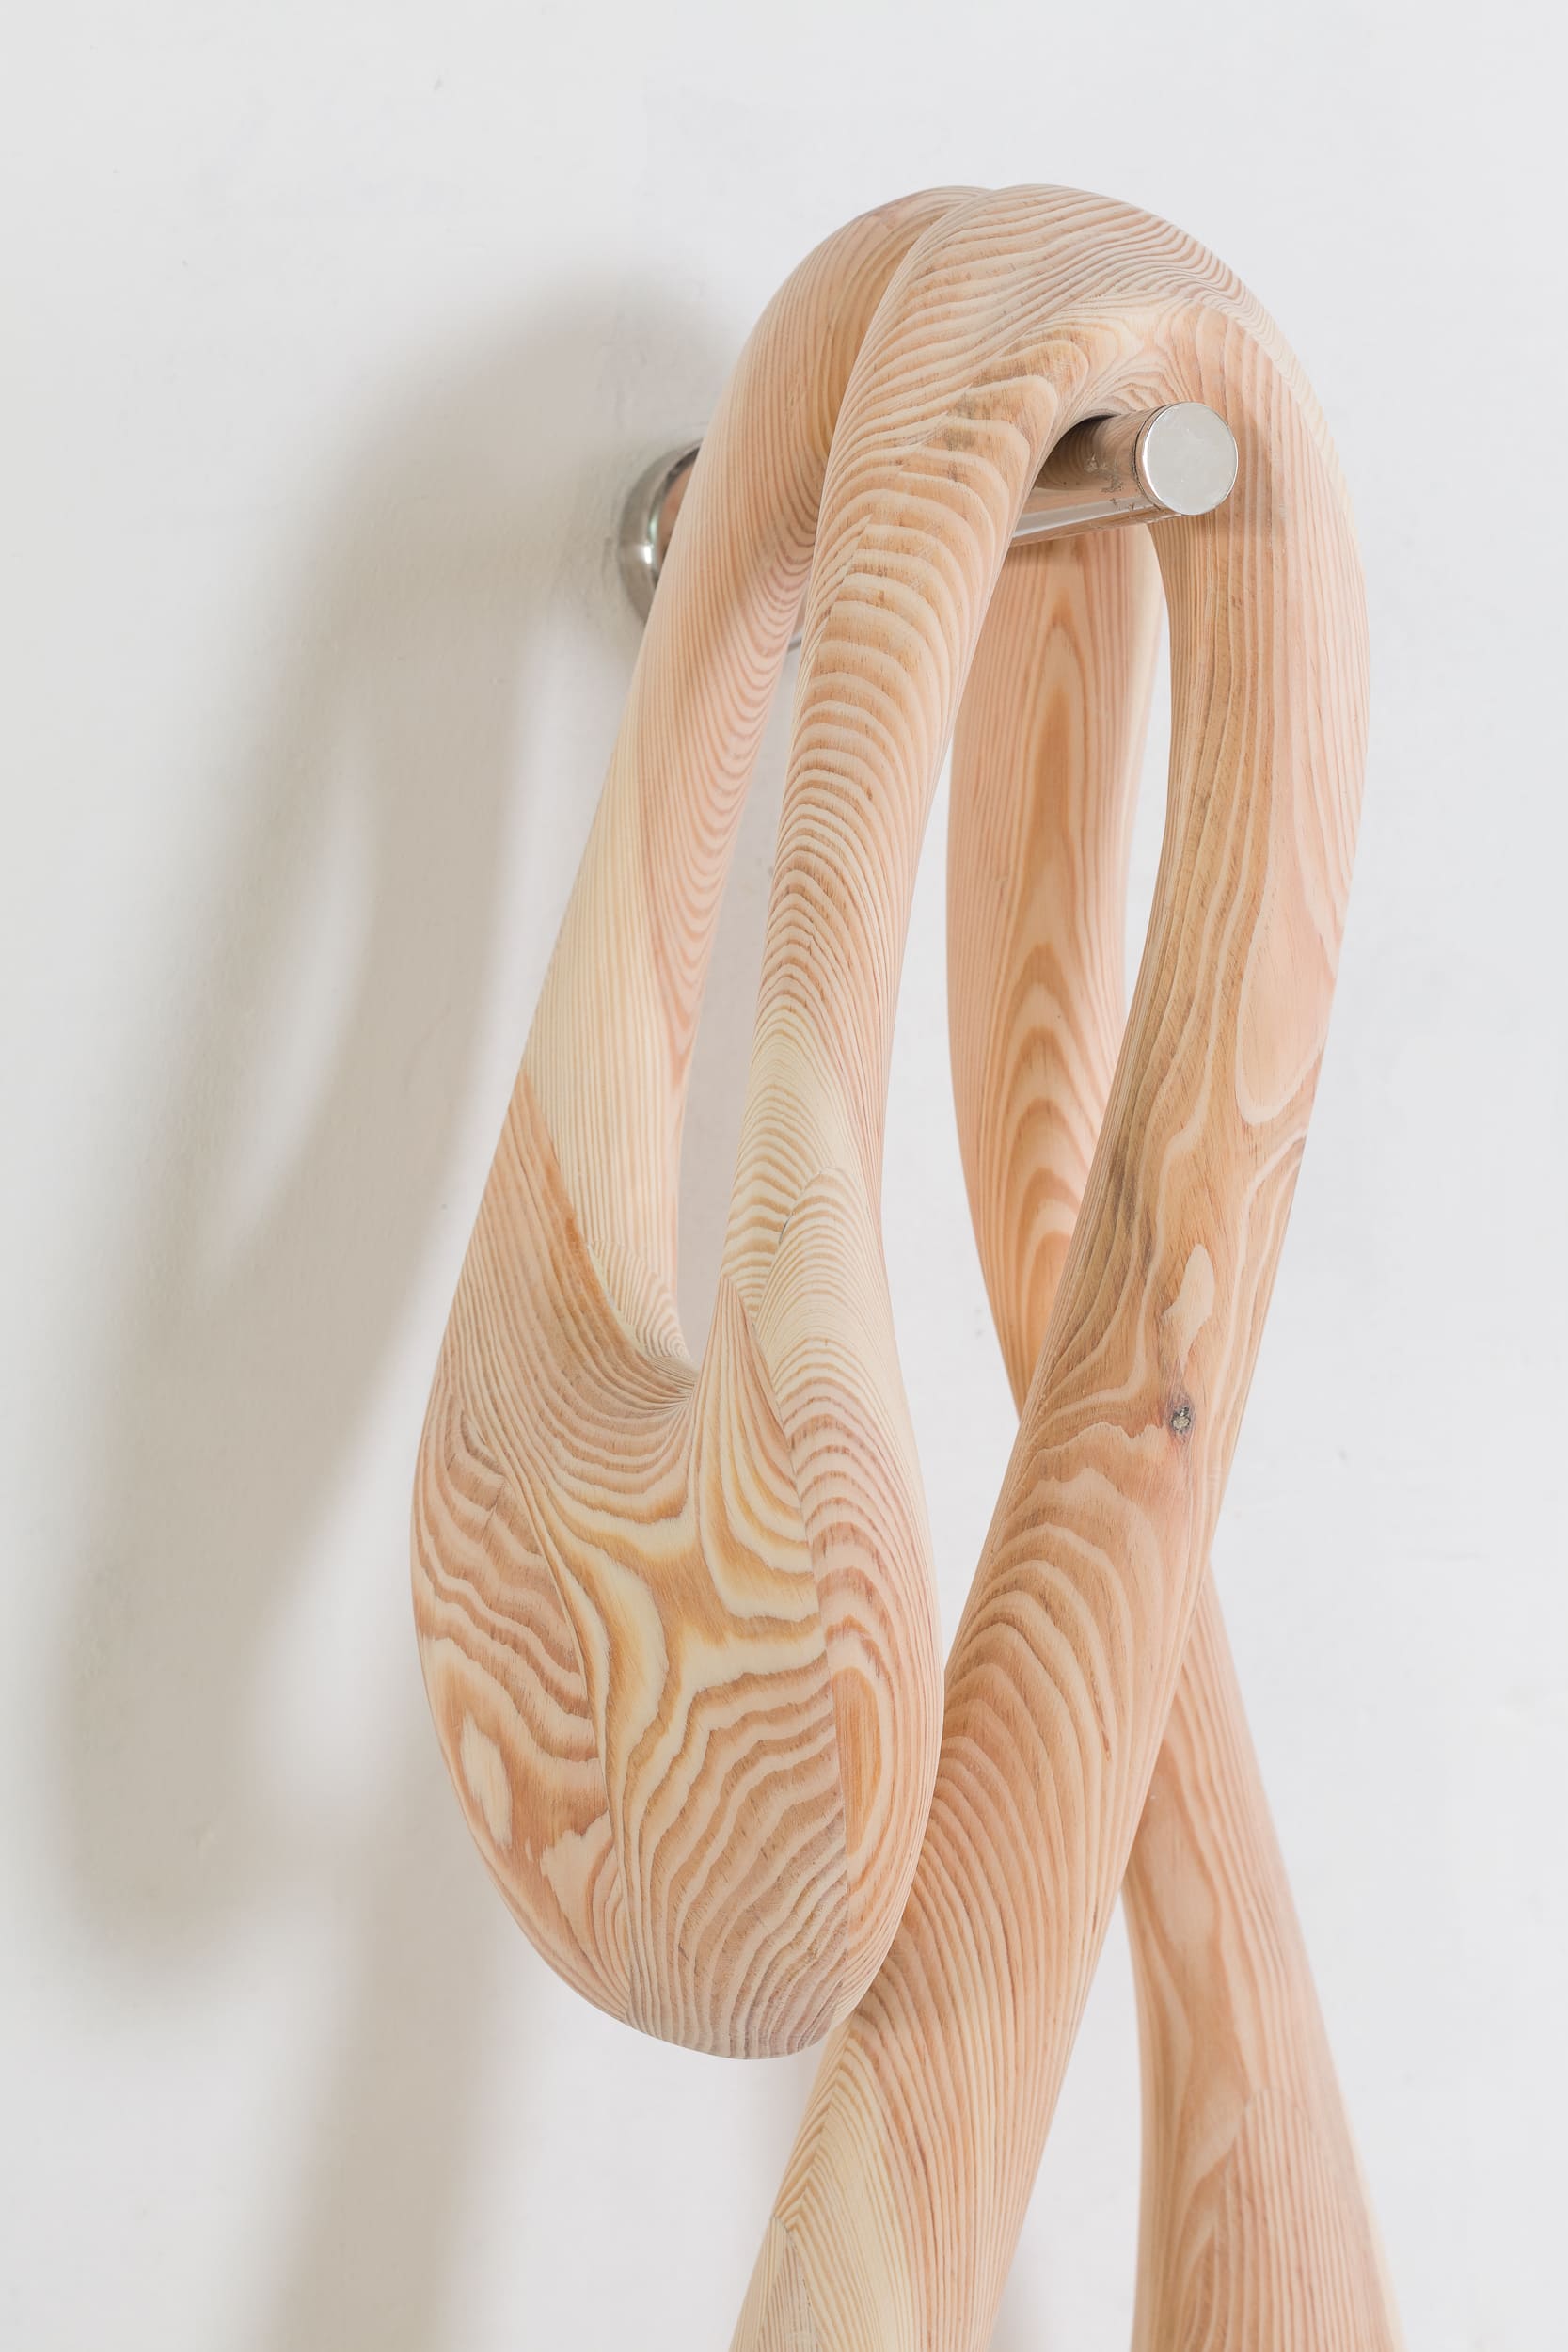 Wood Sculpture N°9 (pendant)2 copy